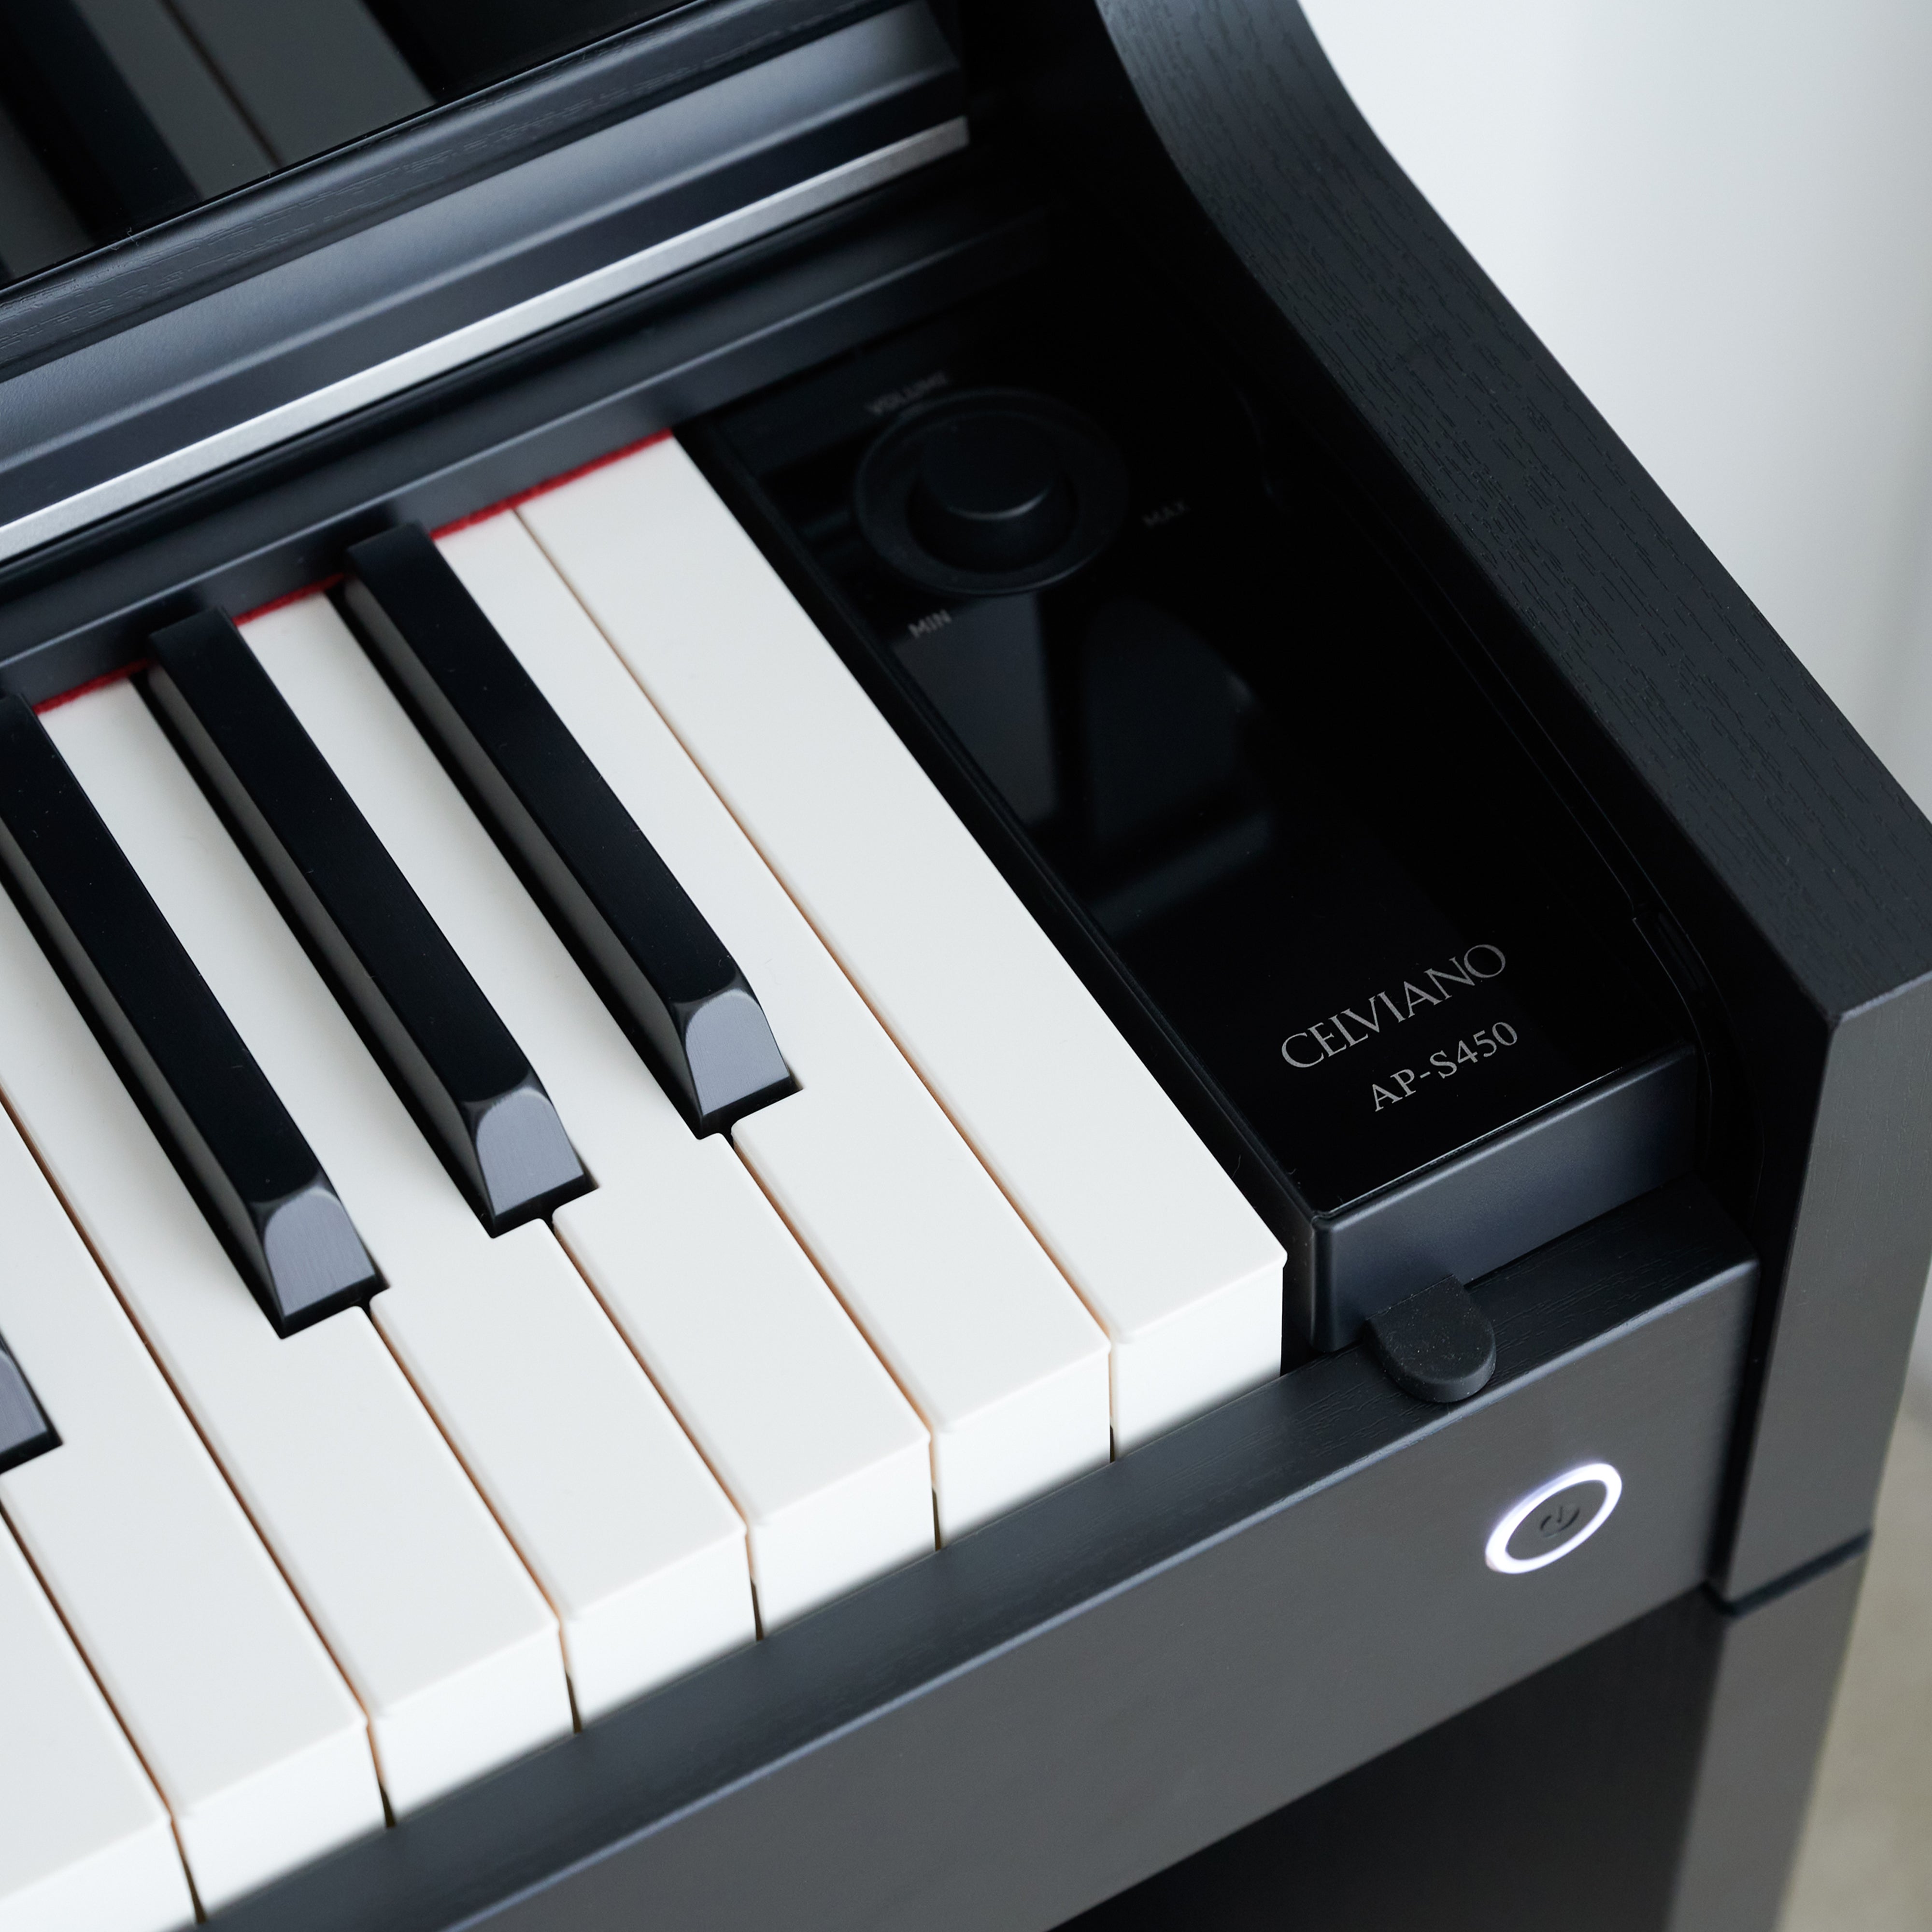 Casio Celviano AP-S450 Digital Piano - Black - power button and volume control